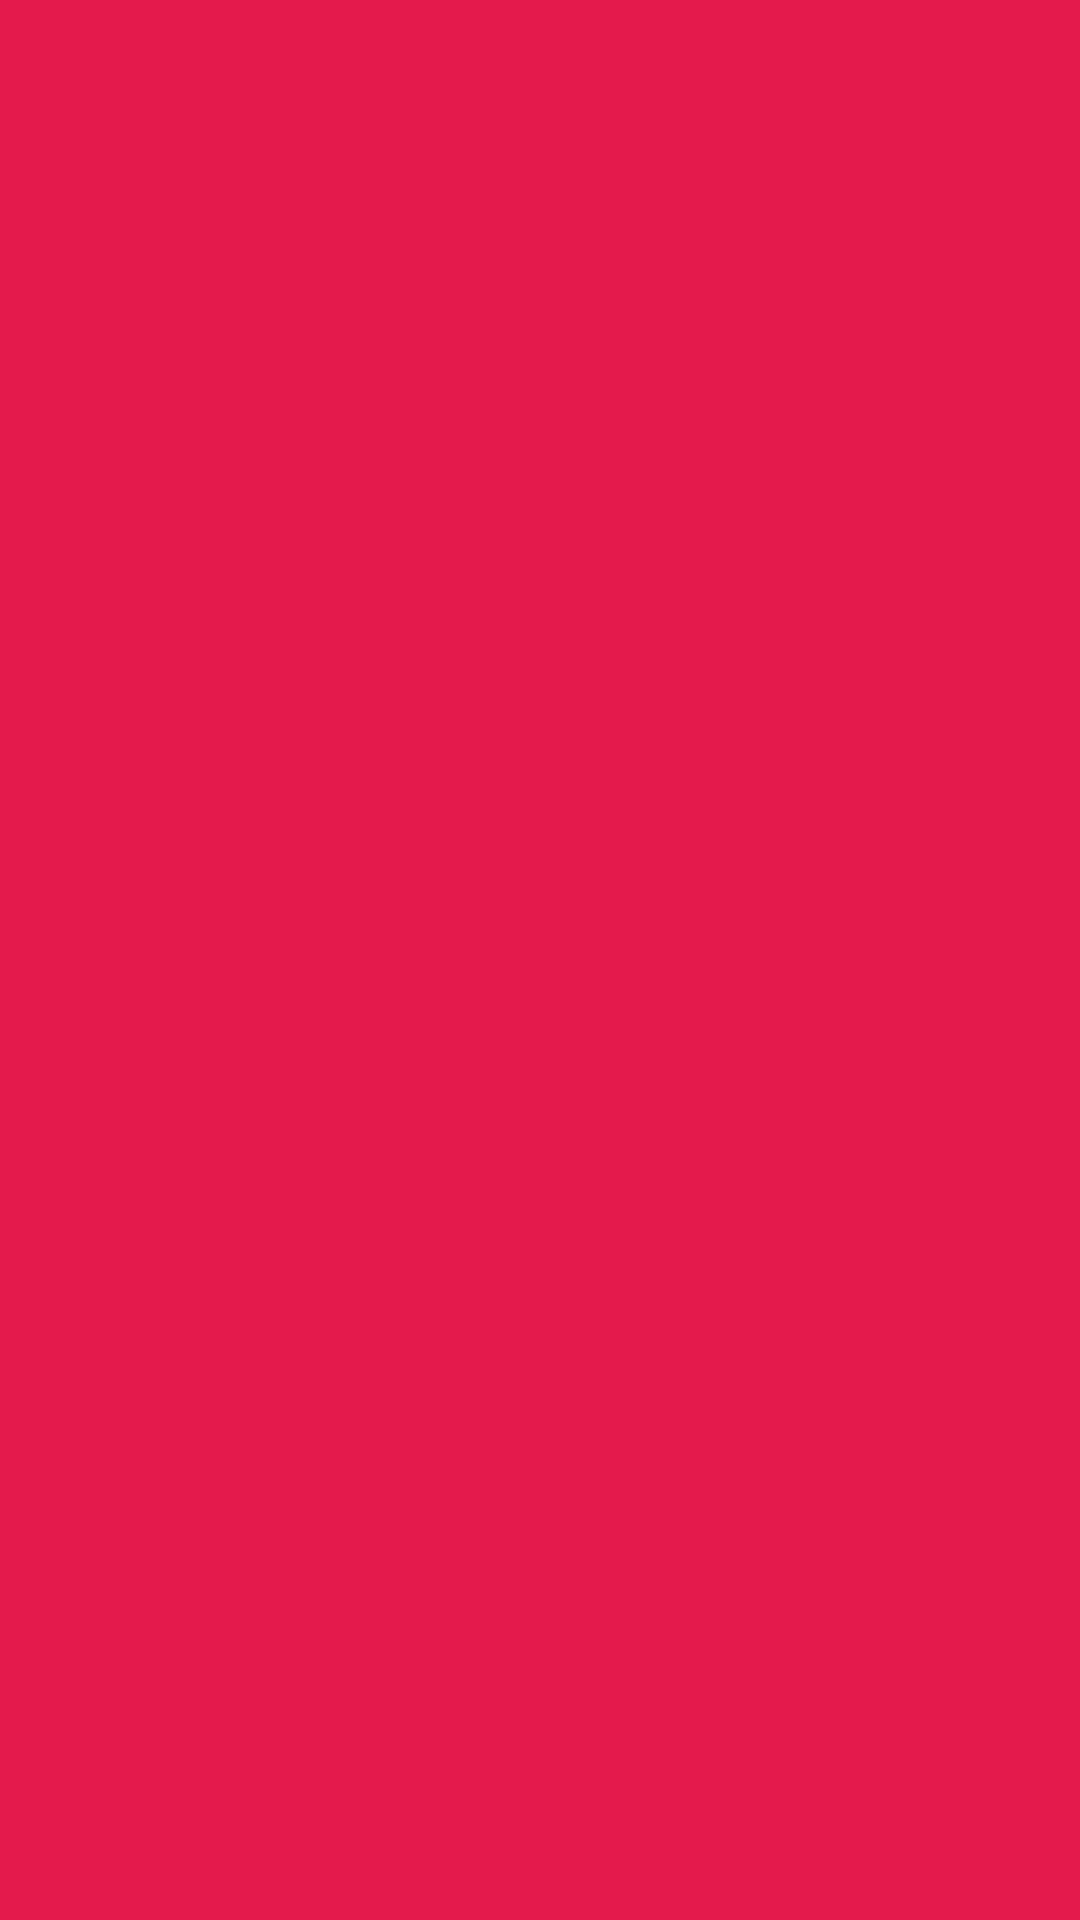 1080x1920 Spanish Crimson Solid Color Background